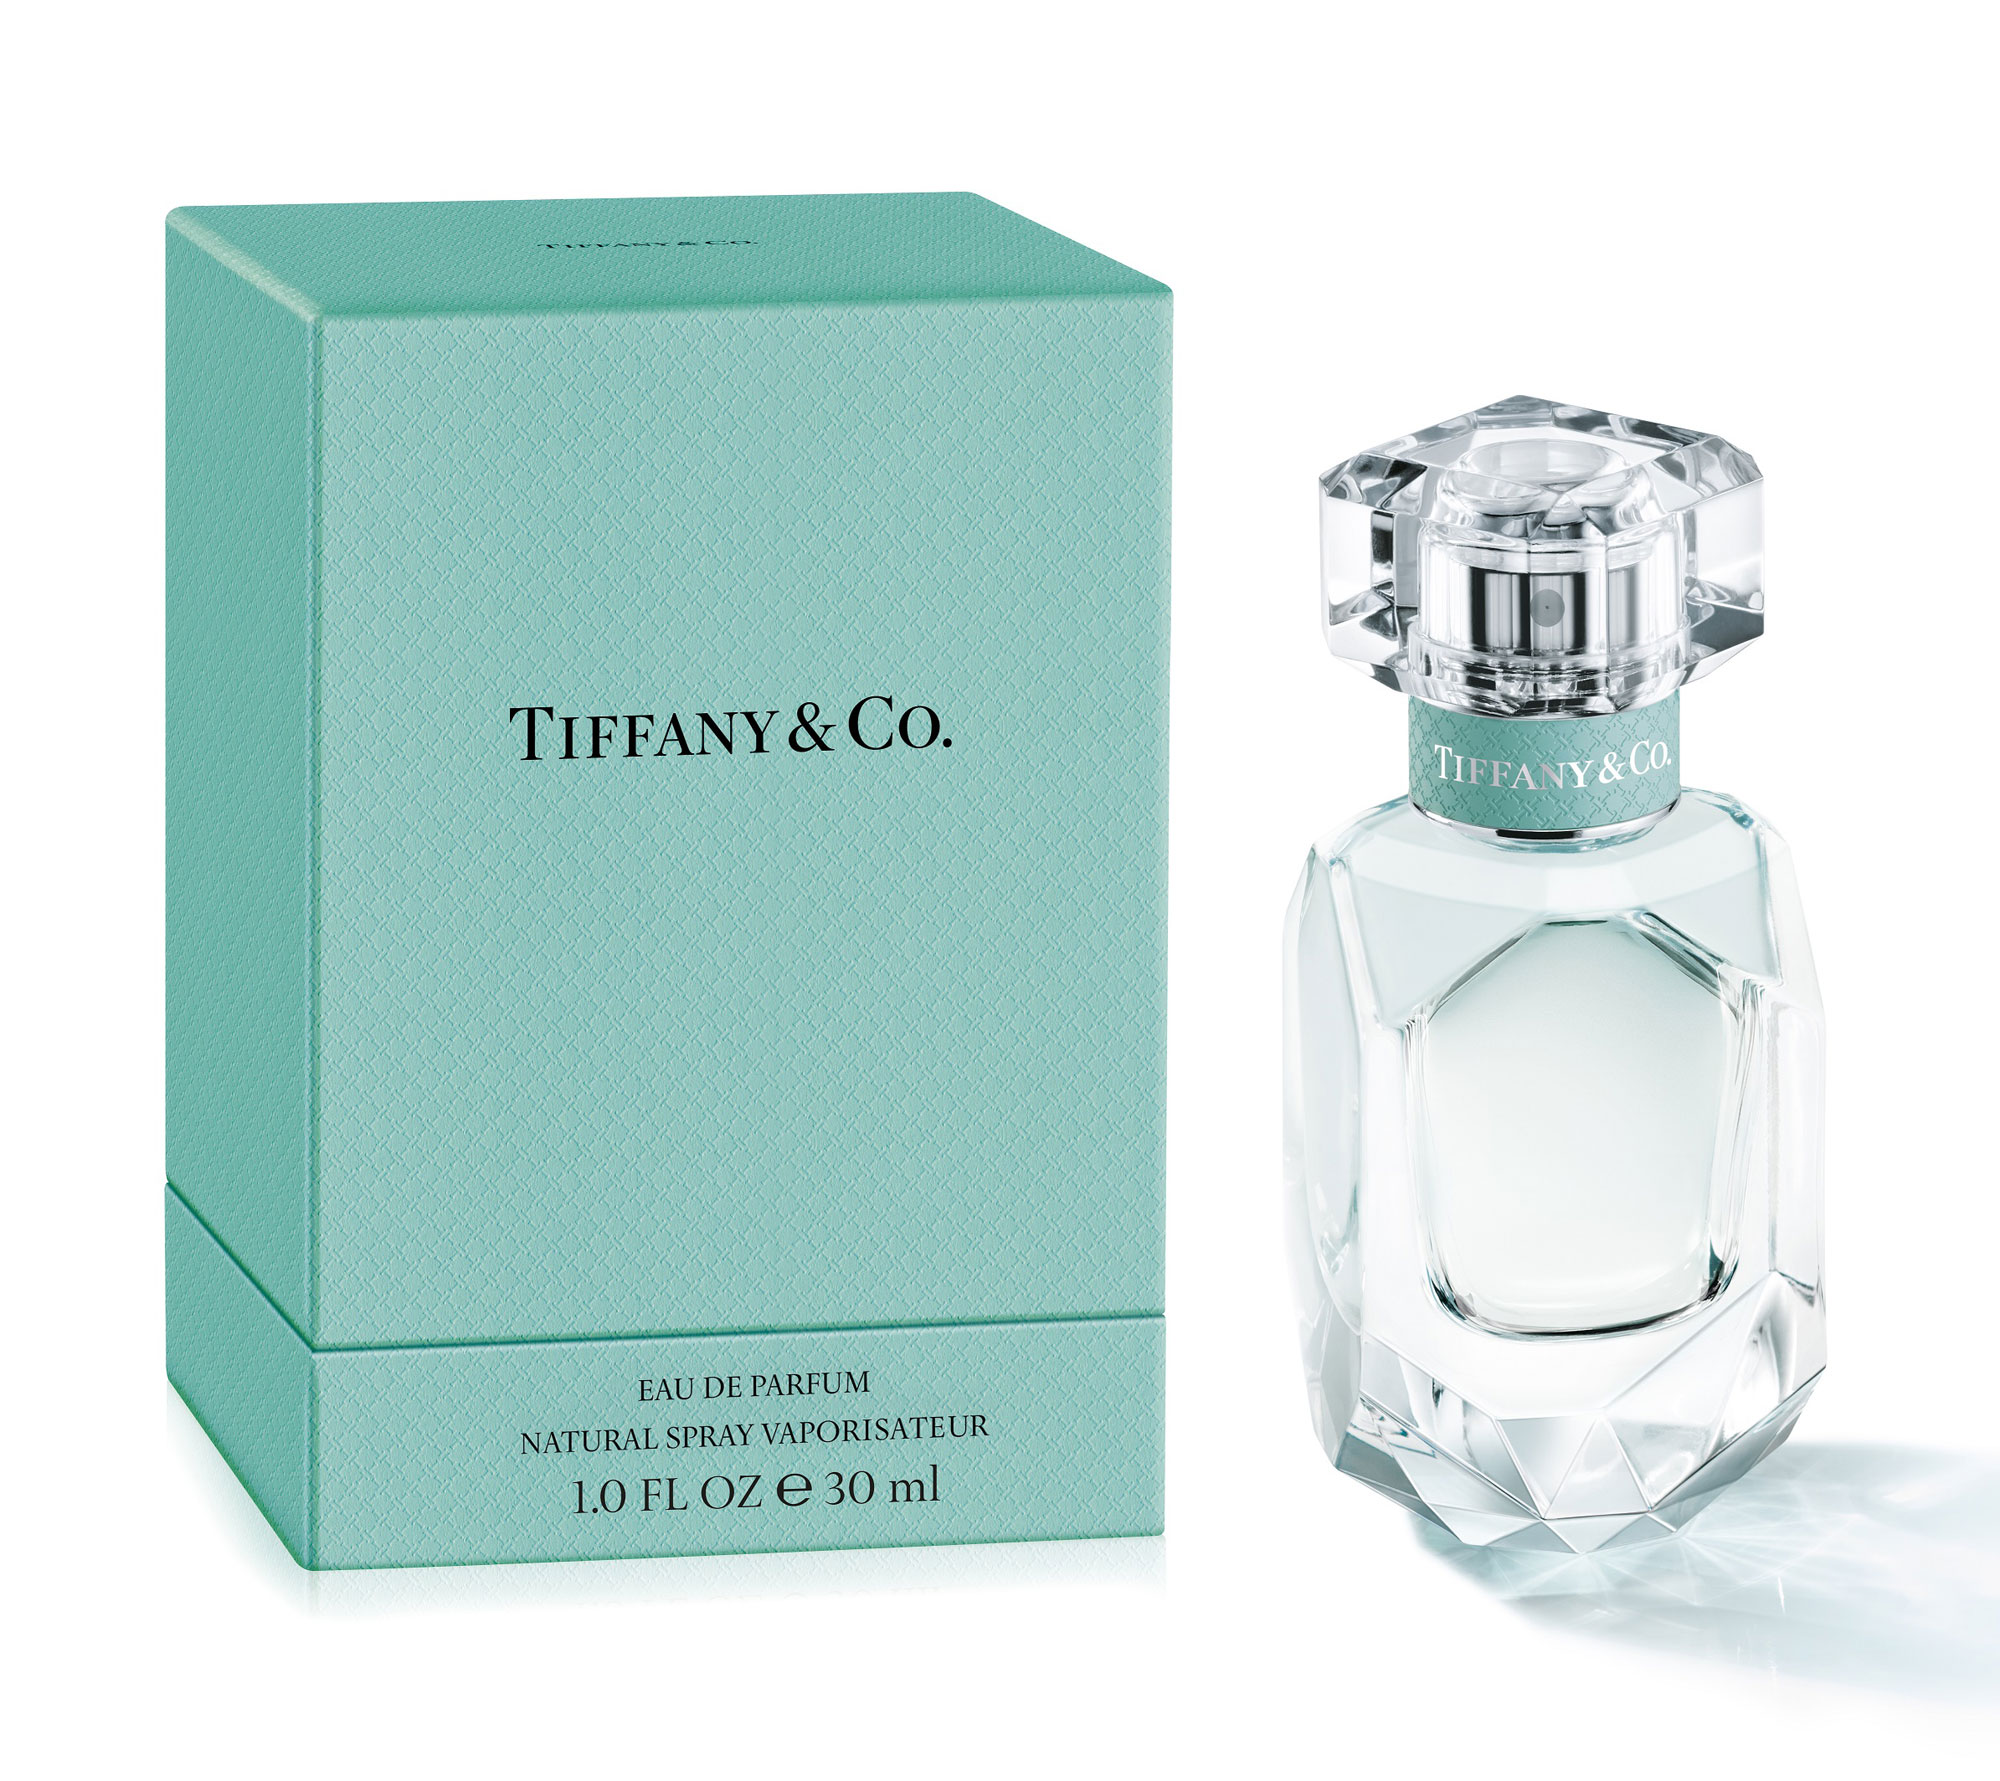 Tiffany & Co Tiffany perfume - a new fragrance for women 2017